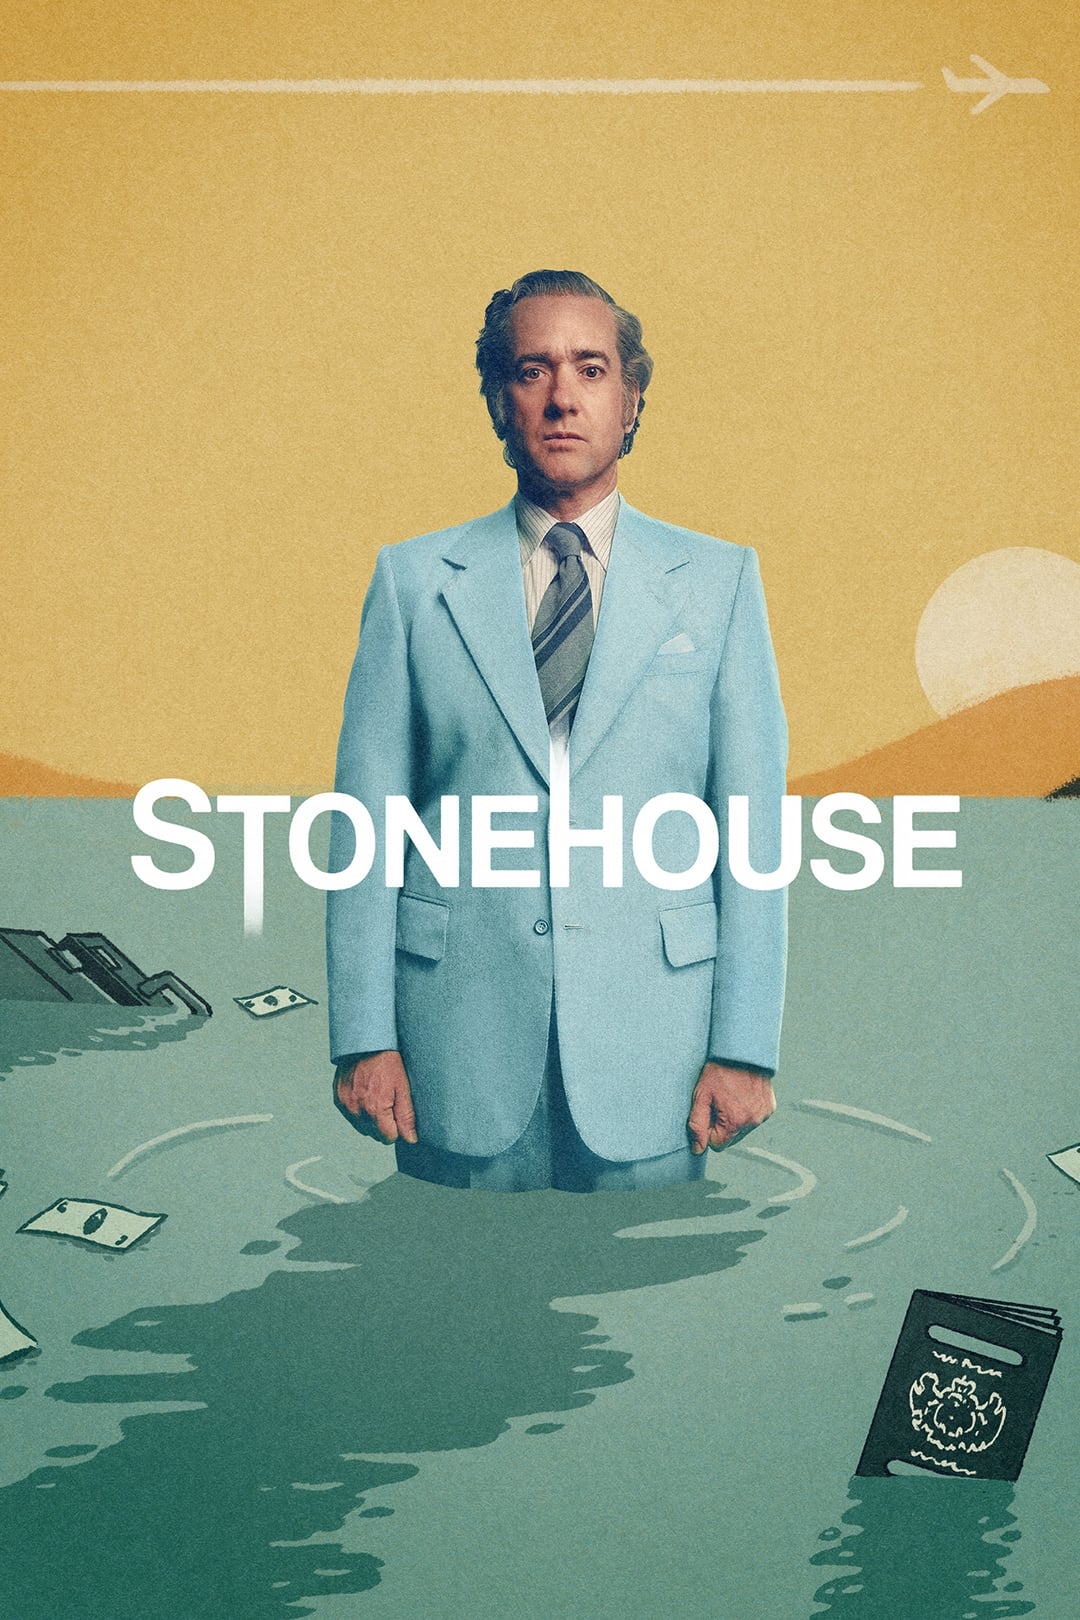 Stonehouse TV Shows About Politics